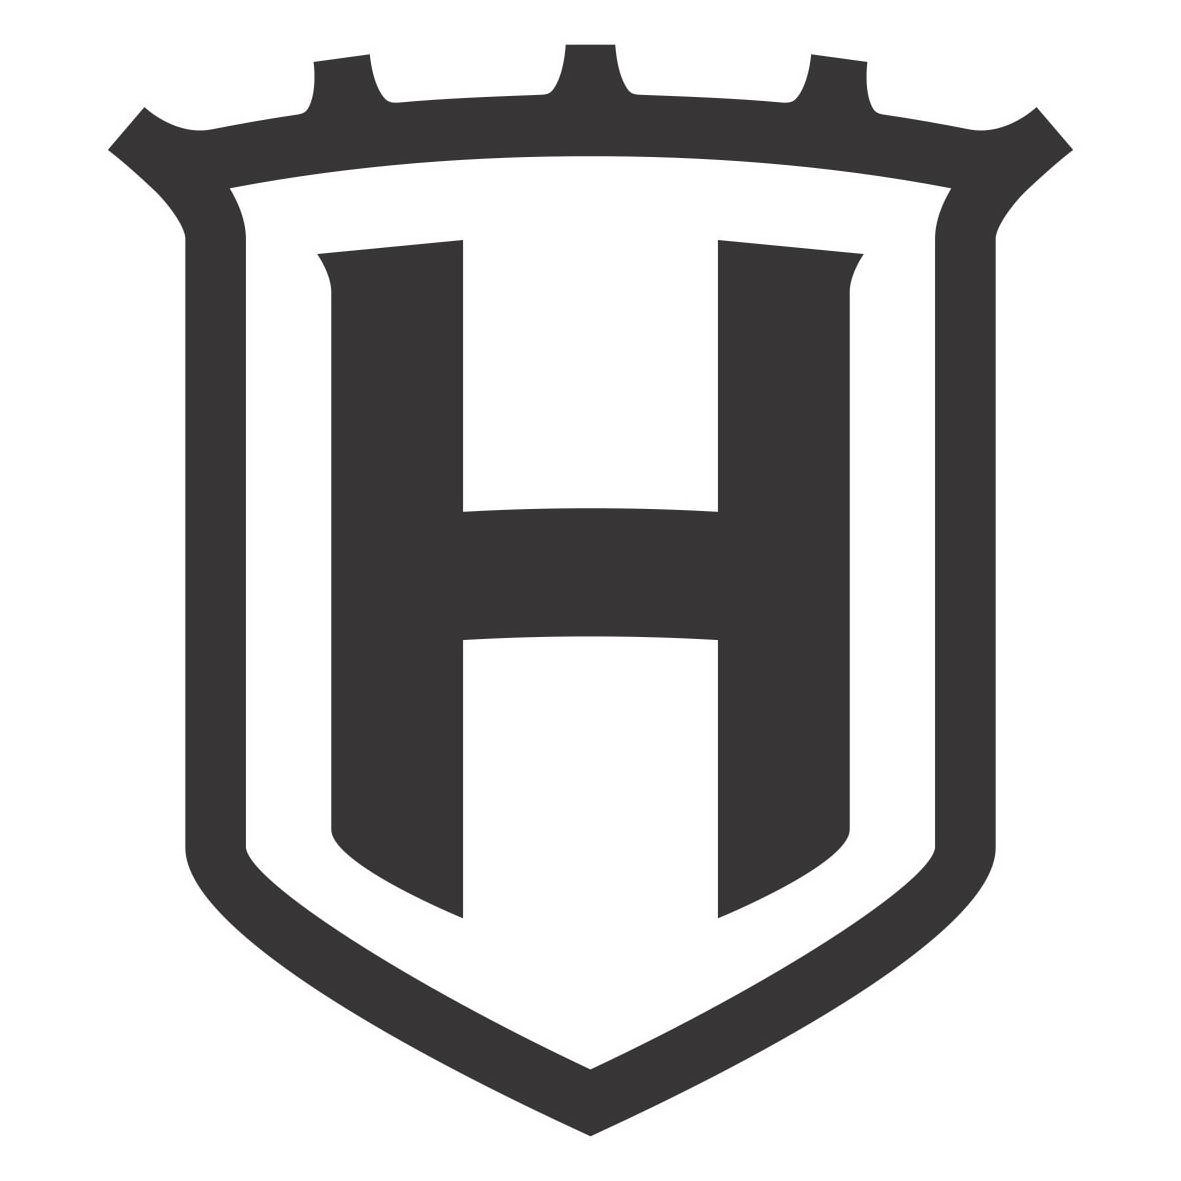 H - Hampton Products International Corporation Trademark Registration